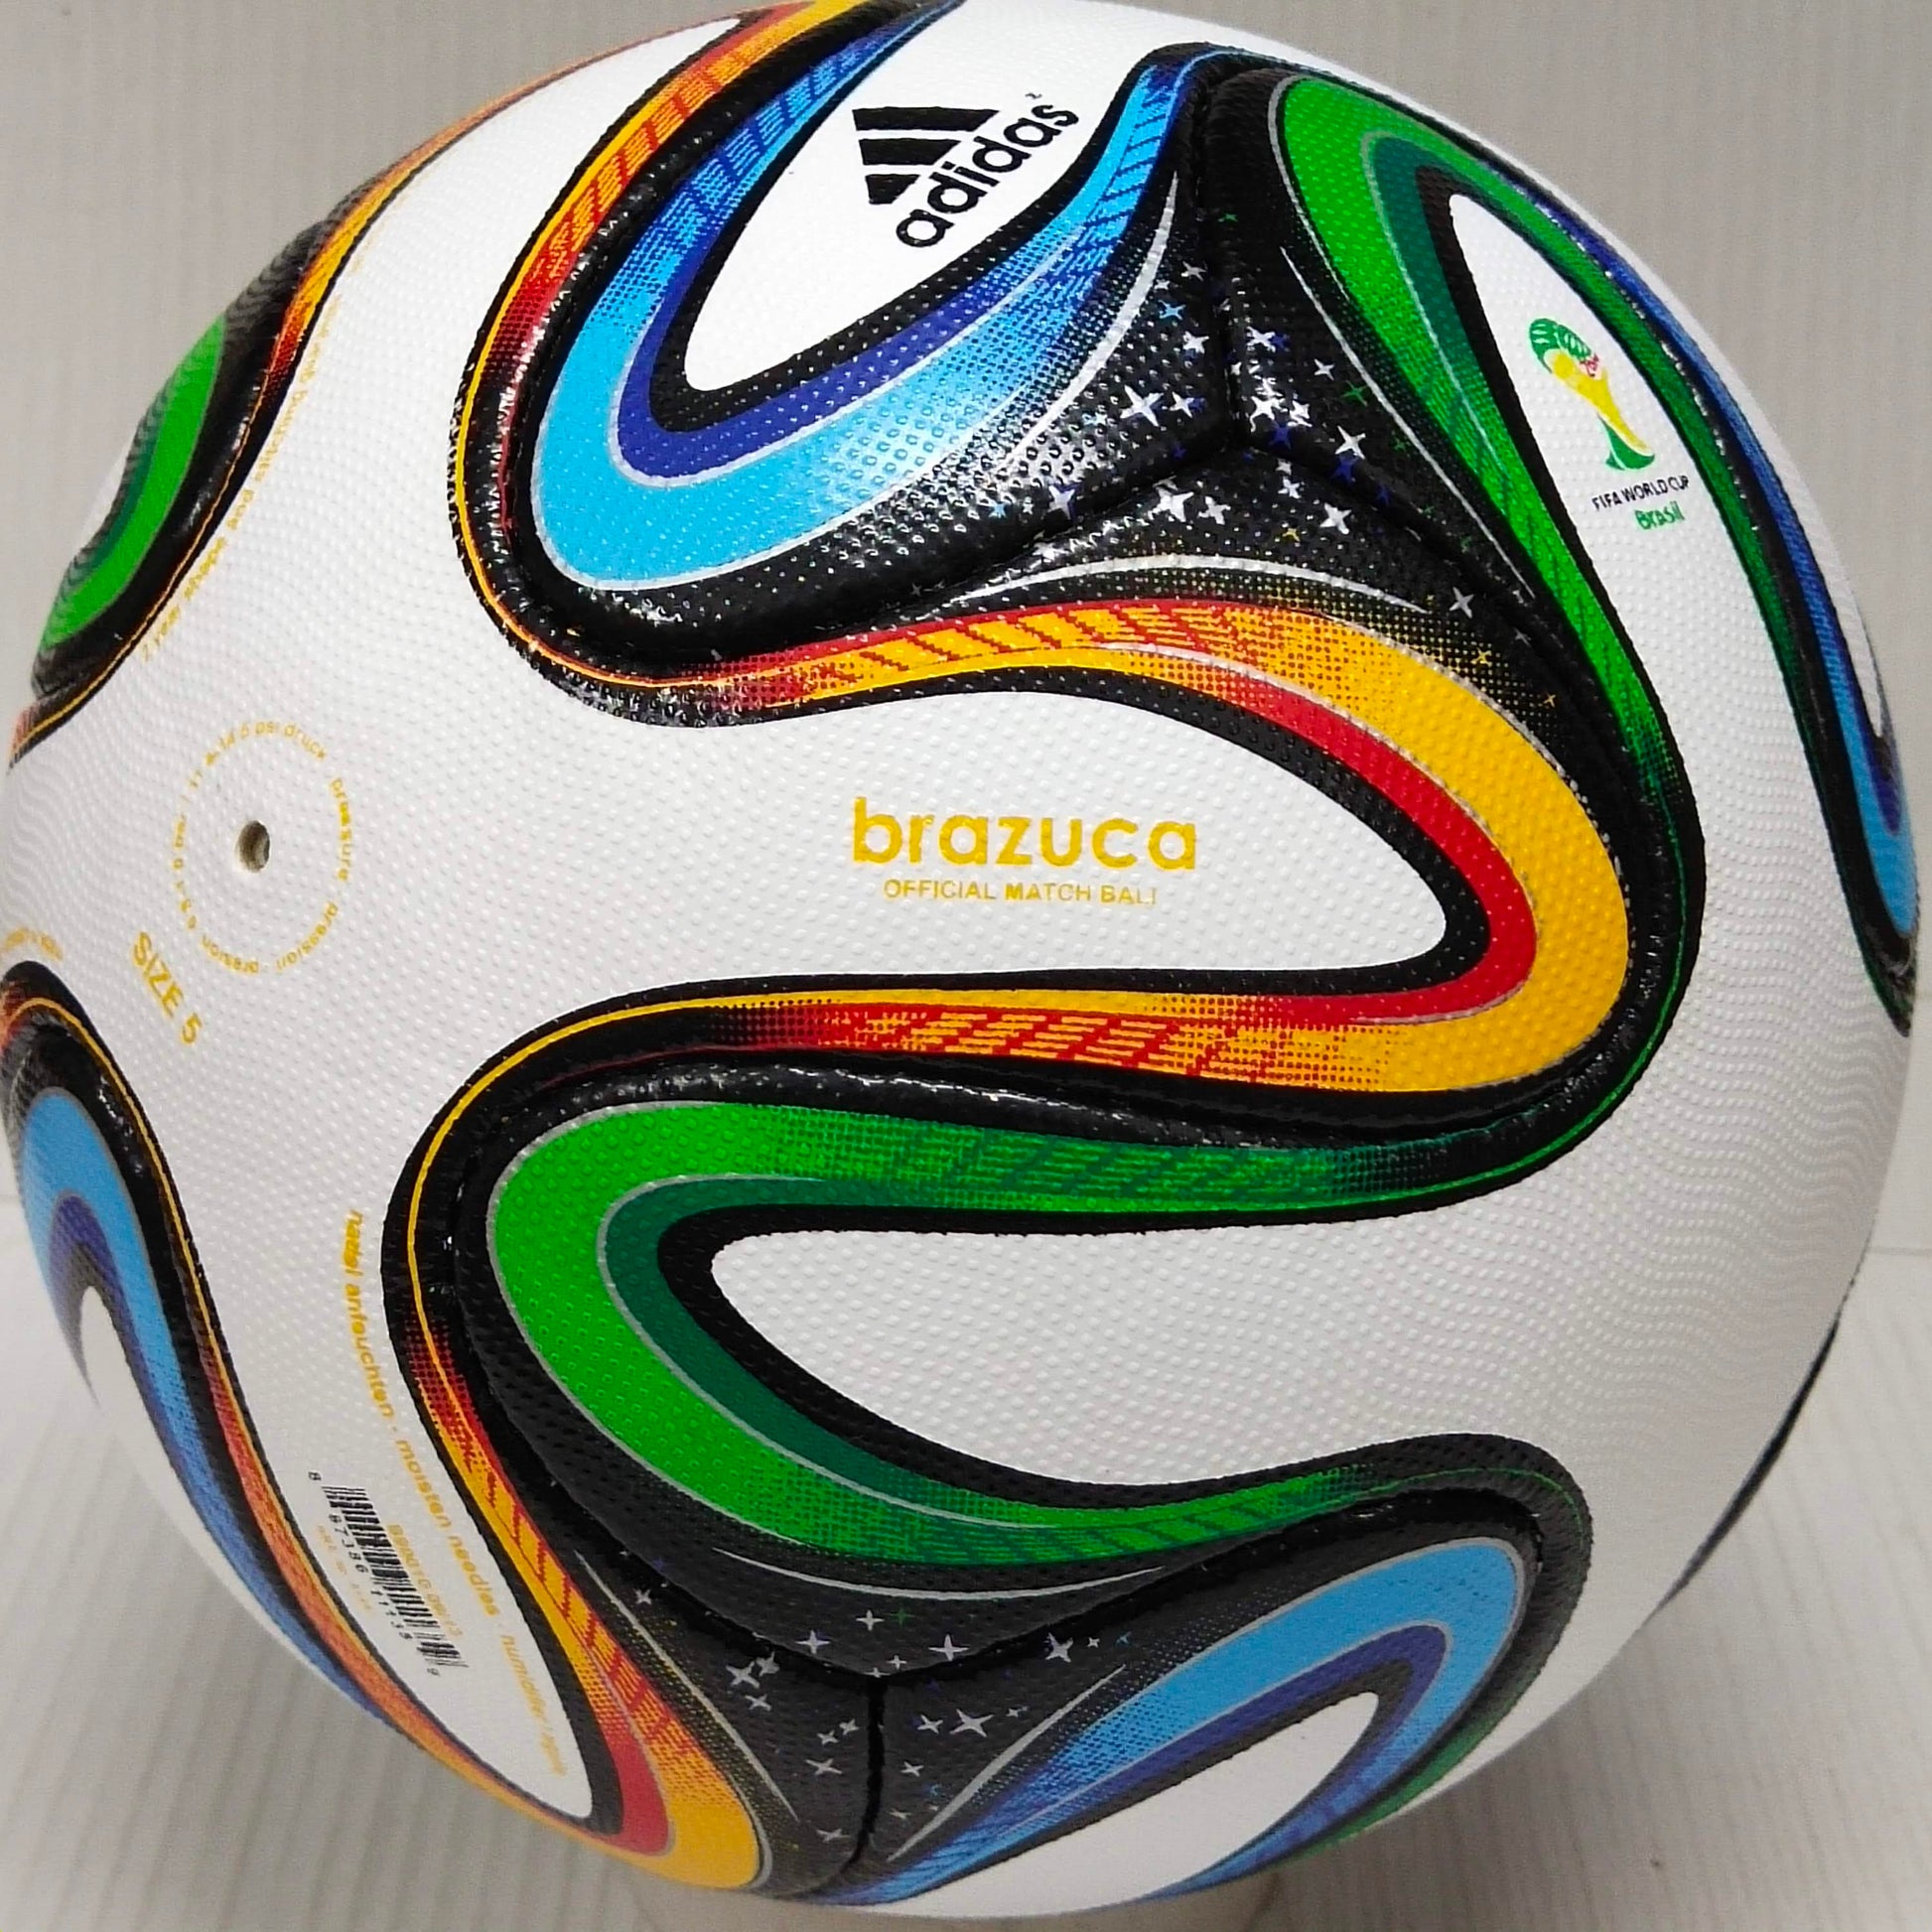 Adidas Brazuca | Match Ball | 2014 | FIFA World Cup Ball | SIZE 5 02